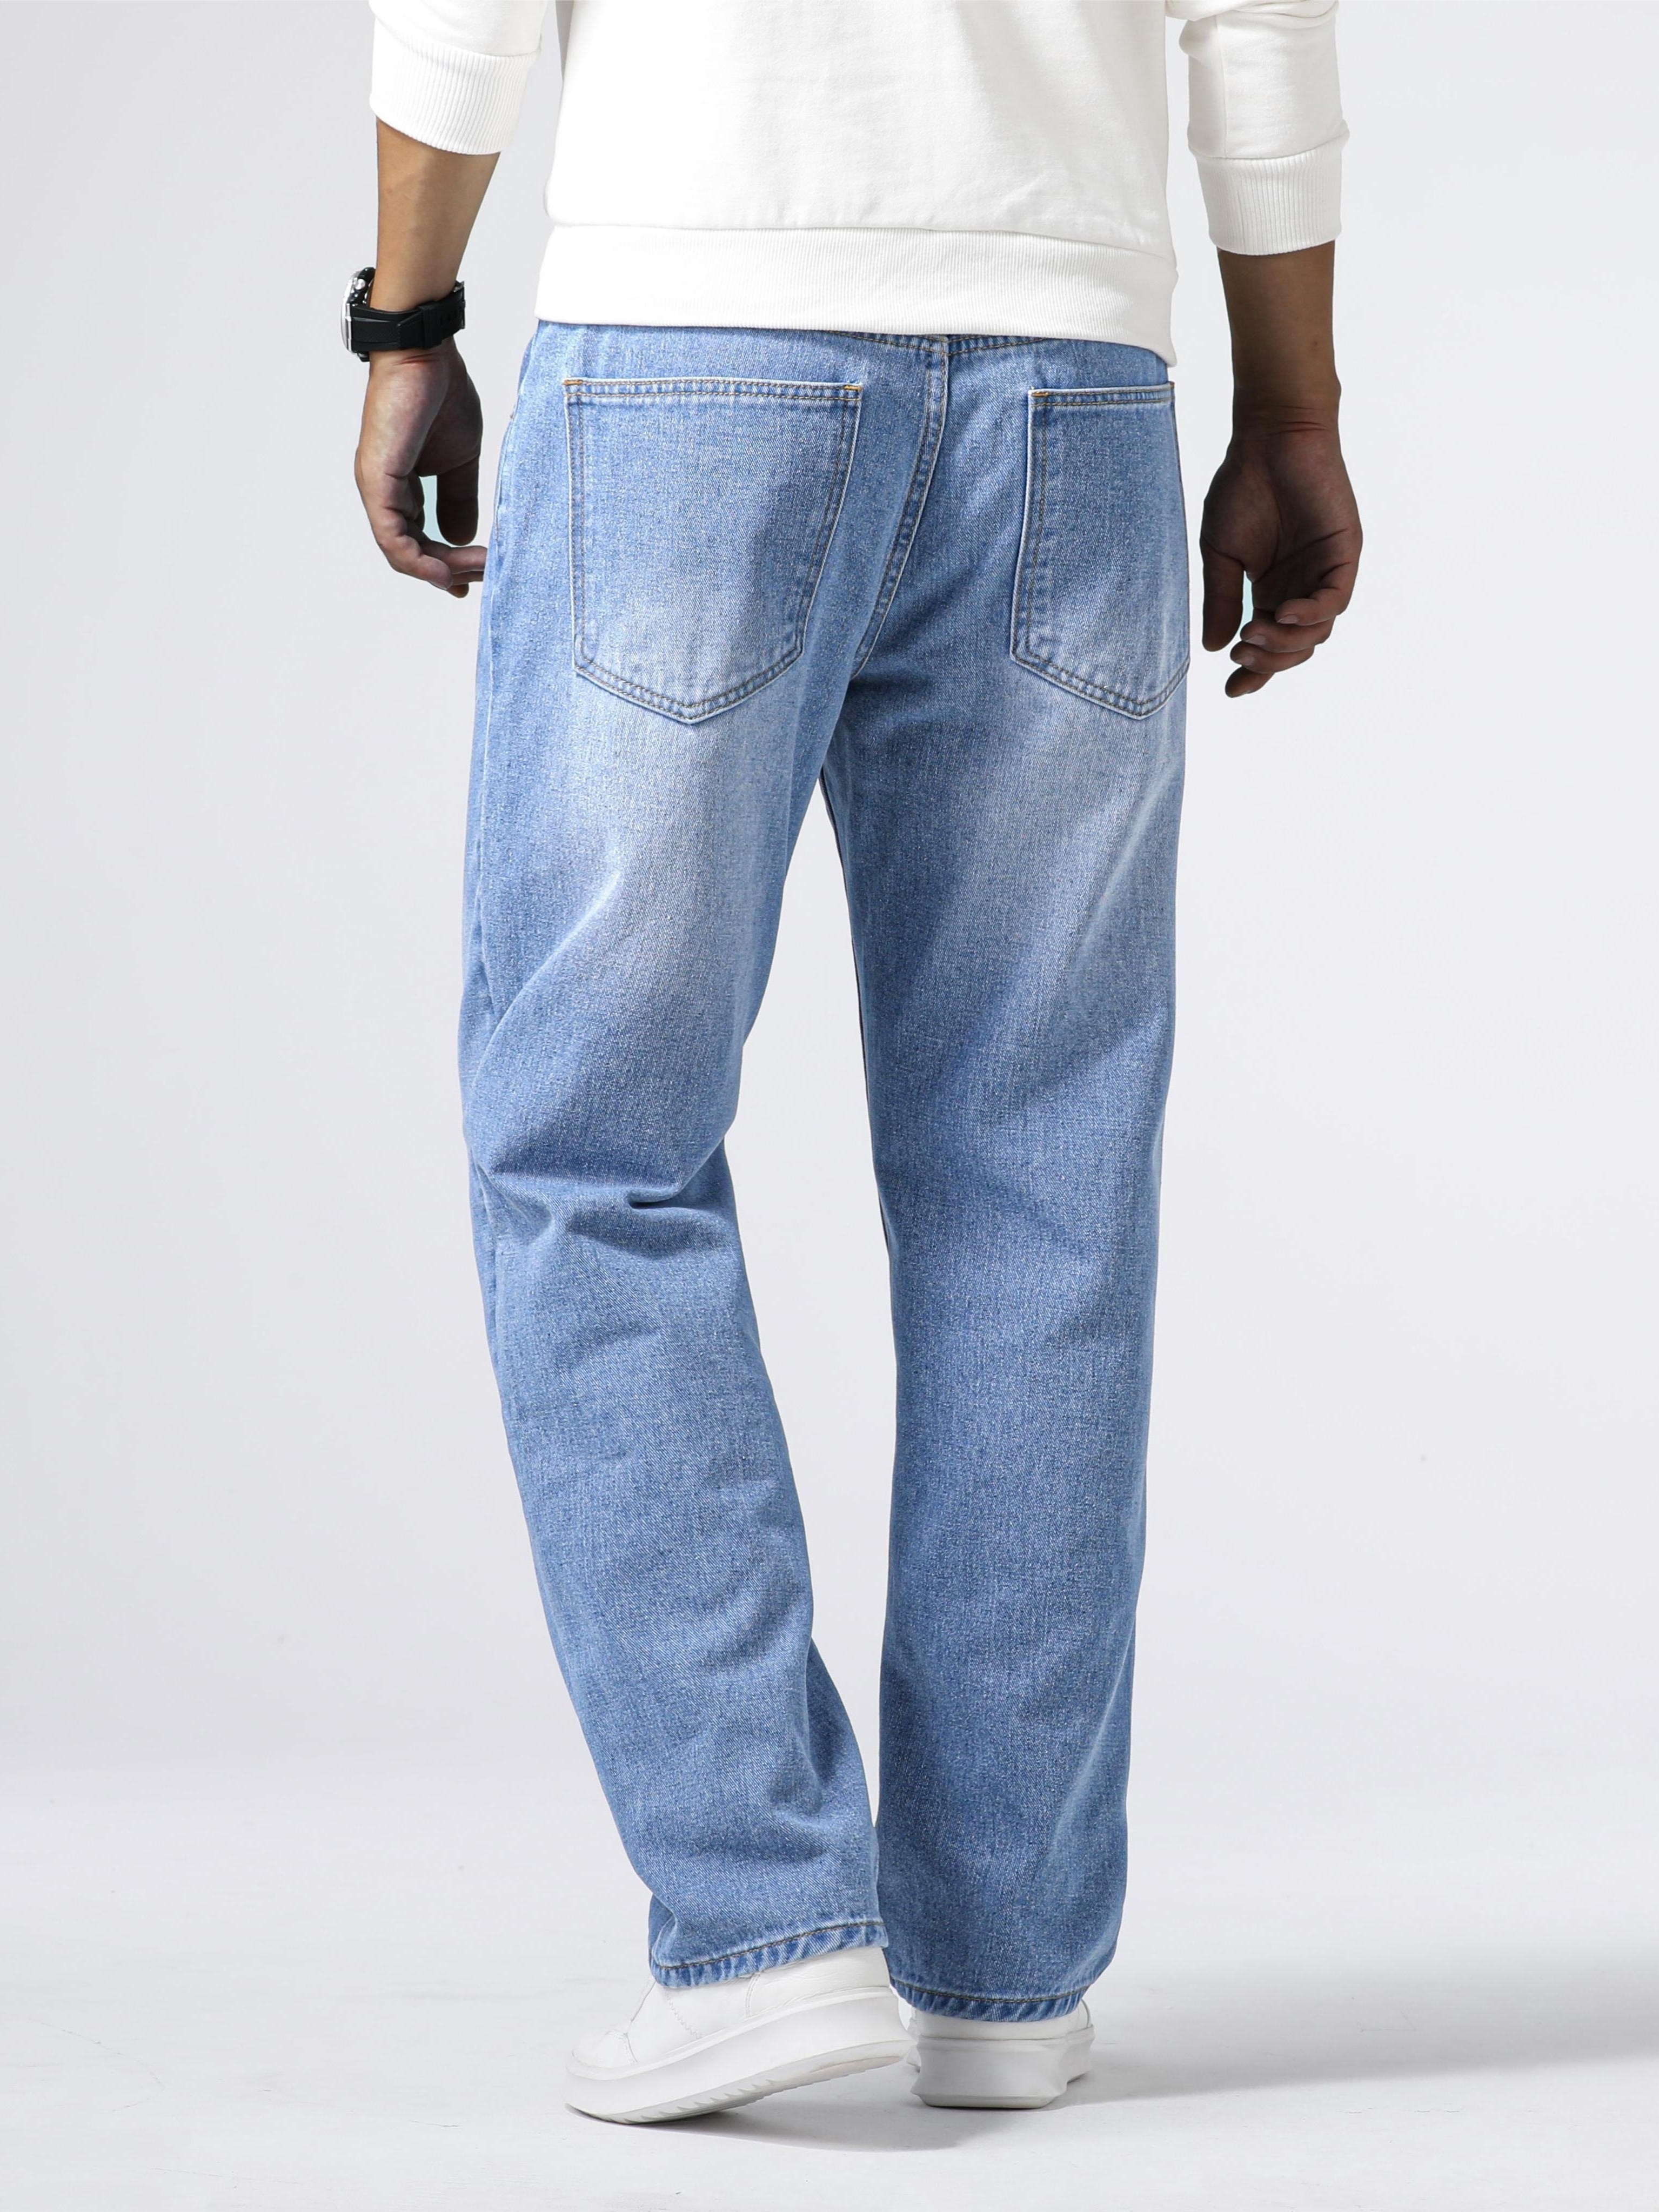 Los mejores pantalones de mezclilla para hombres - Britos Jeans